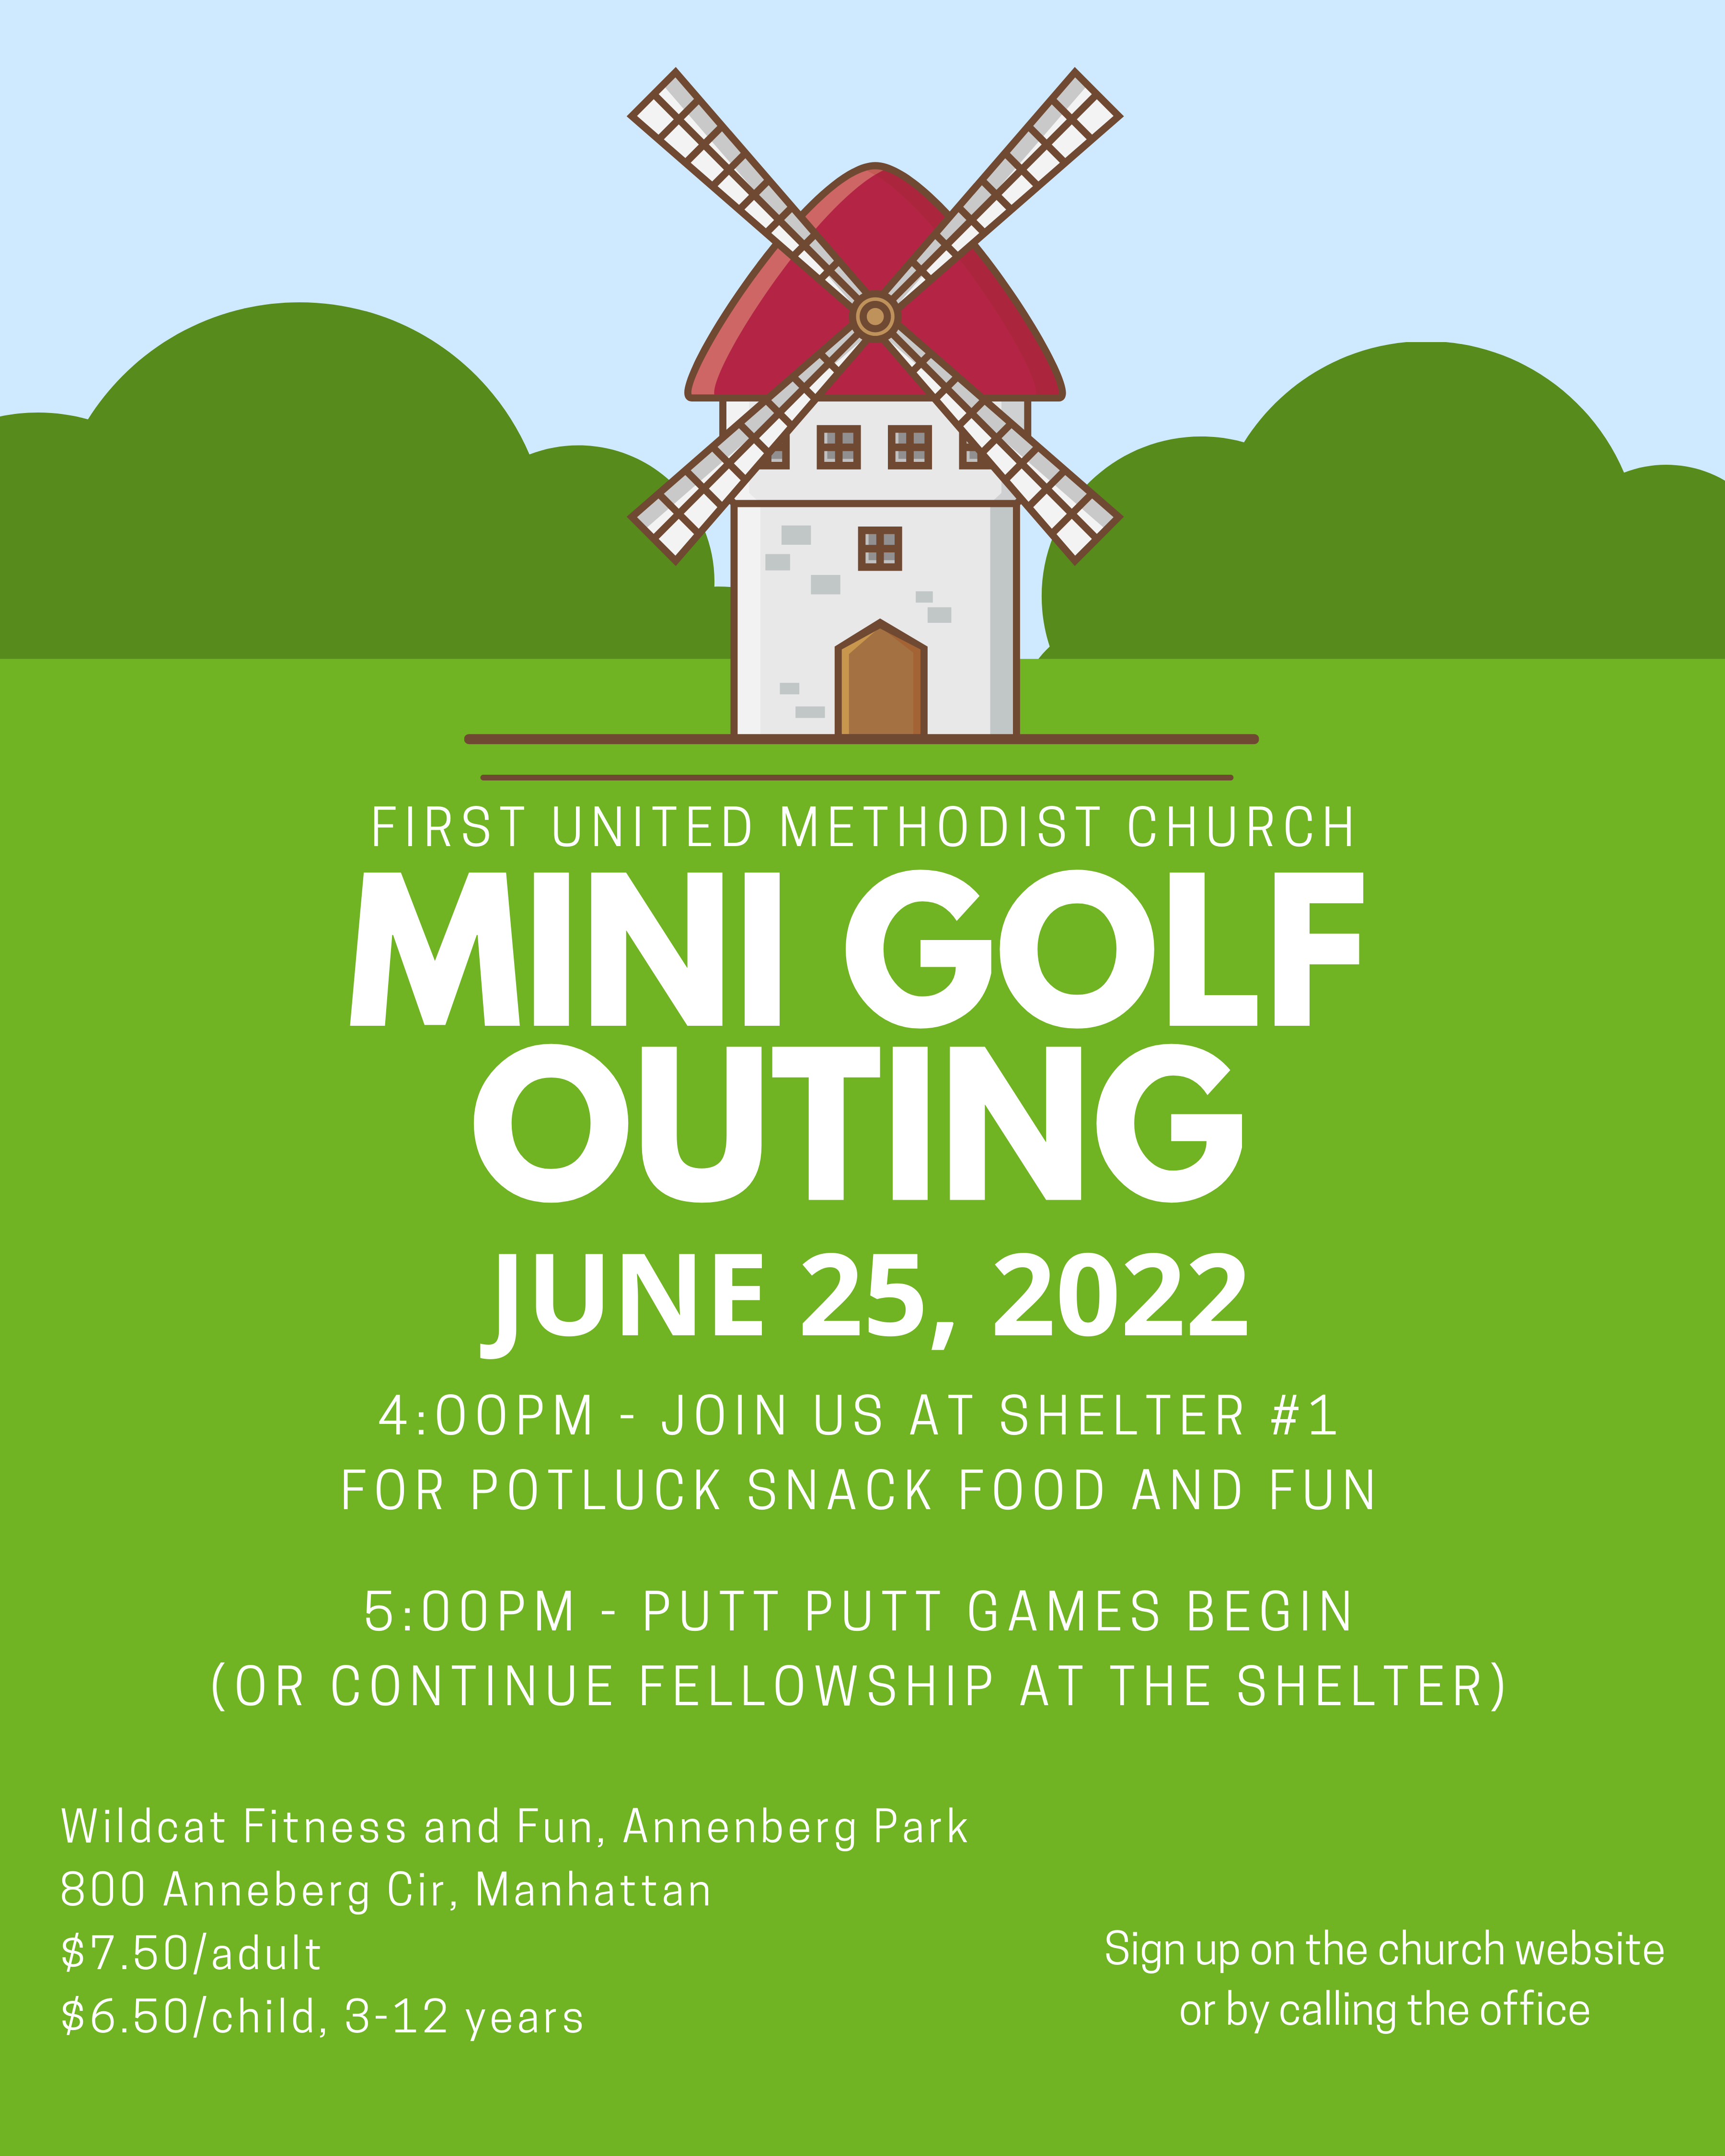 Mini Golf Outing